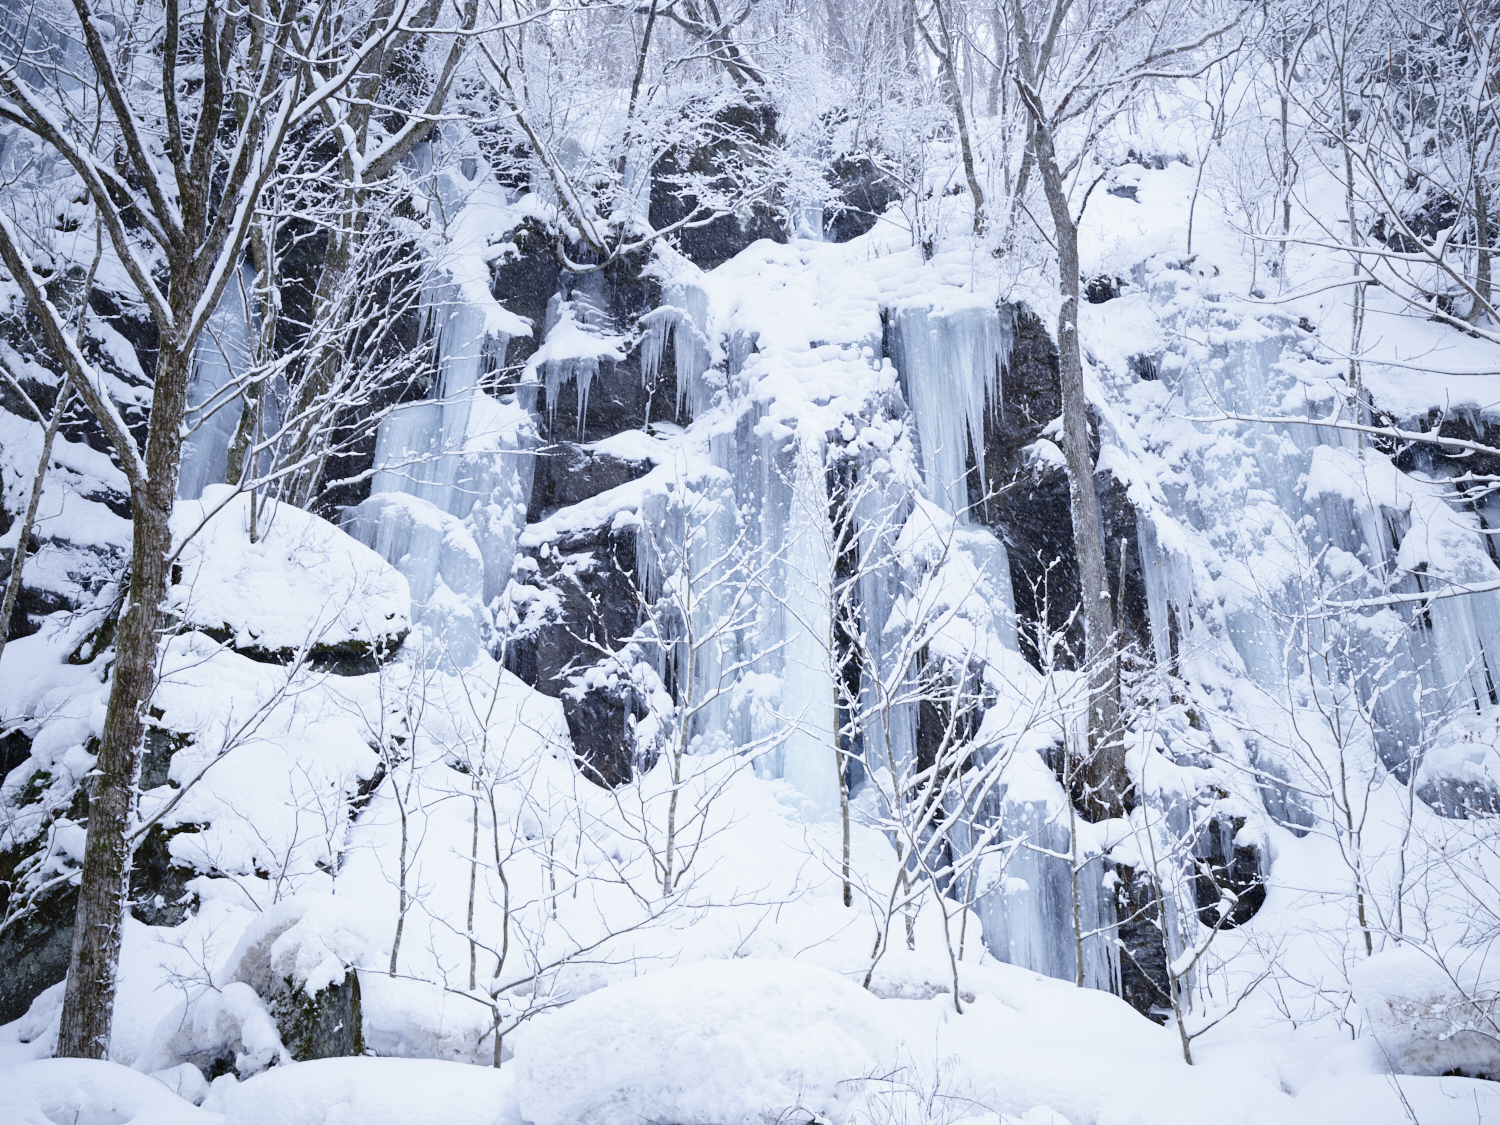 ▲ Winter Oirase Gorge Guided Tour Course: Hotel-Kumoi no Taki / Drop-off location: Sanran no Taki, Makado Rock, Kumoi no Taki / Apply to the activity desk by 20:00 the day before.